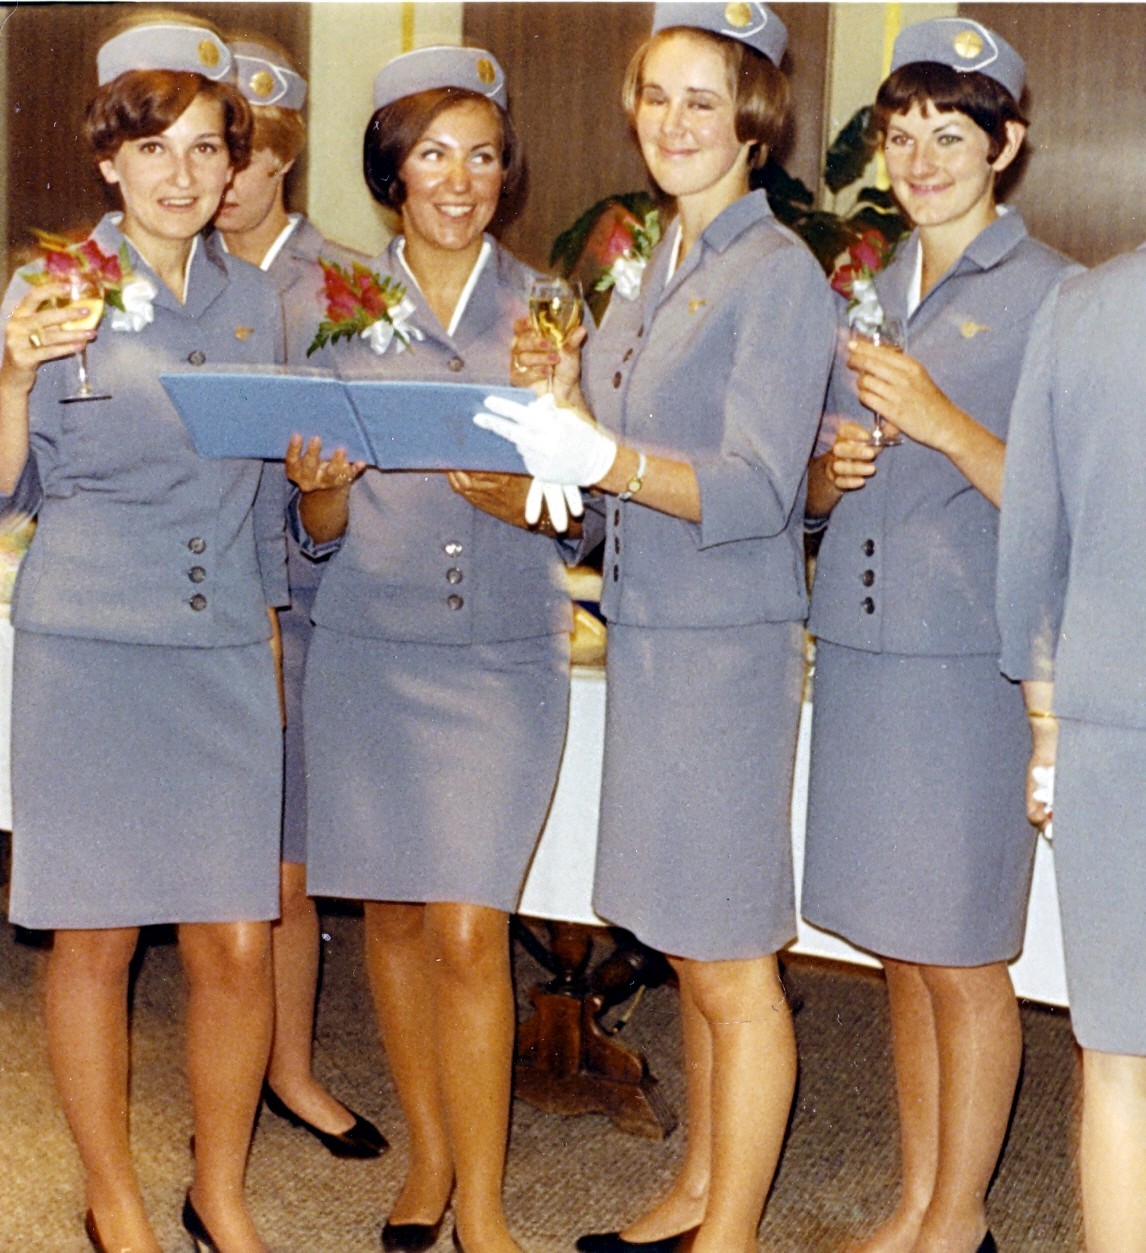 1968 May, Donuta (Diane Wolk, Maureen van Leeuwen,, Leslie Watson and Christine Buys on Graduation Day from the Pan Am Flight Service Academy in Miami, Florida.